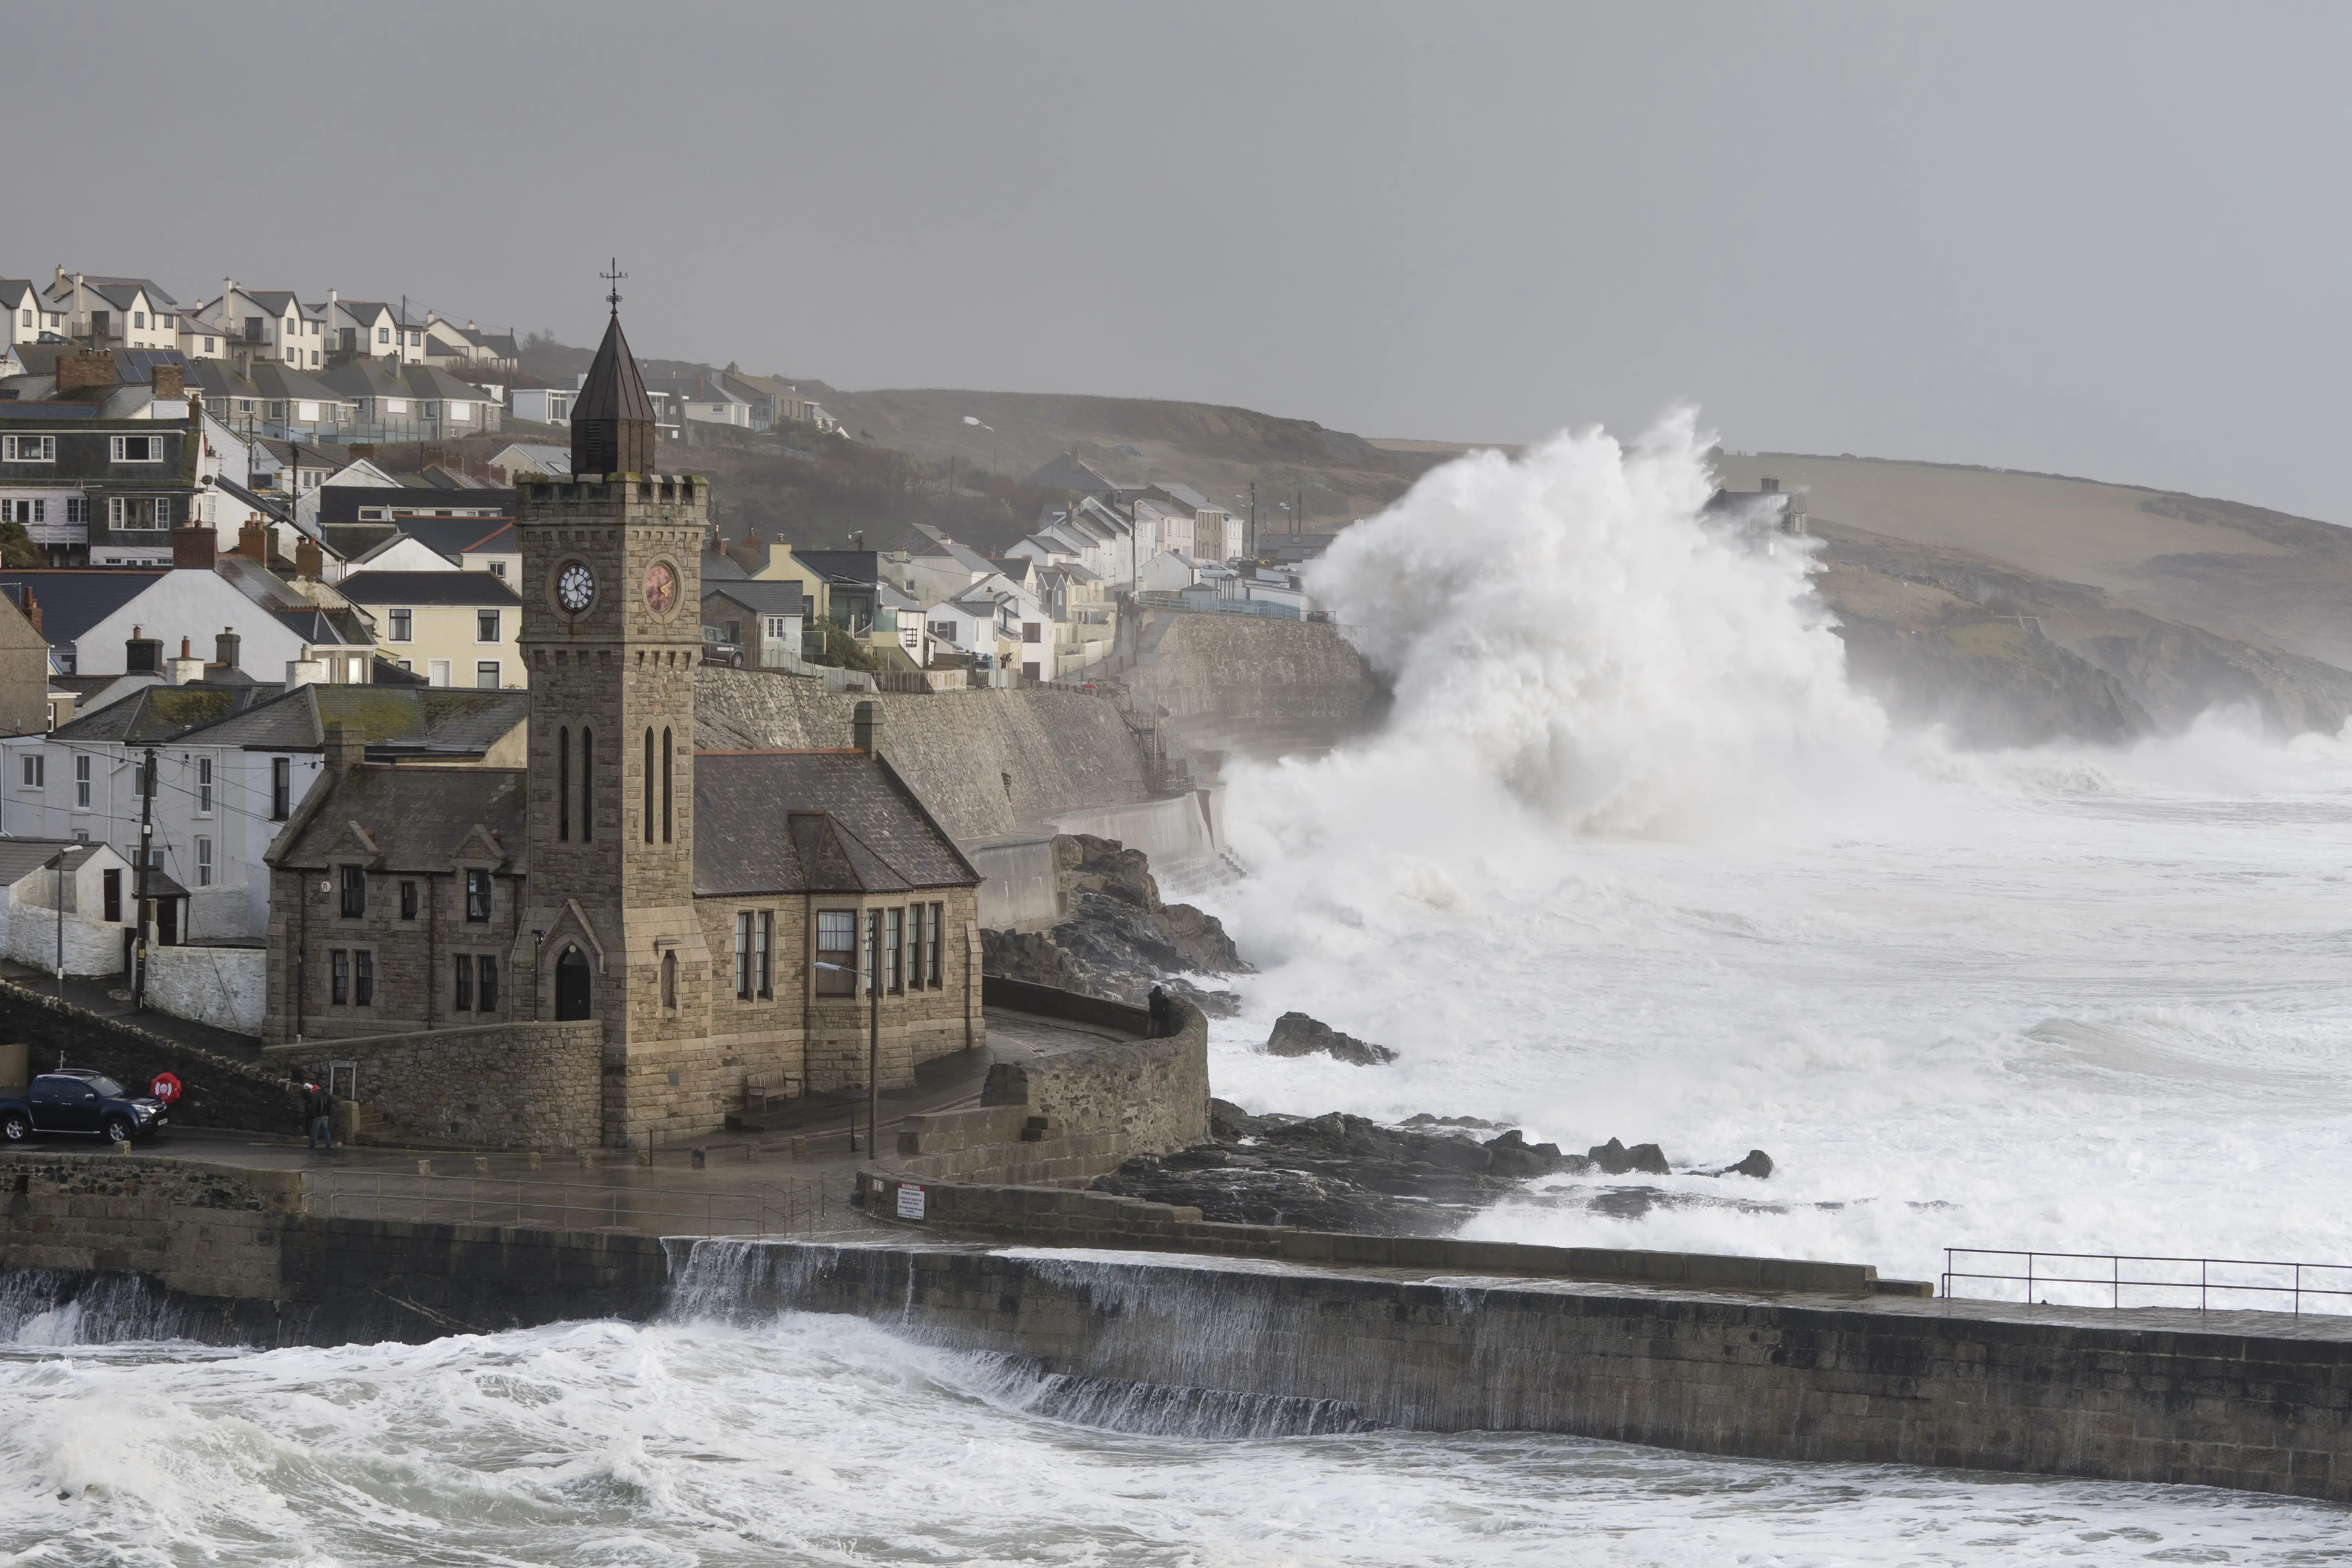 Huge wave in Porthleven, Cornwall (UK) during Storm Imogen